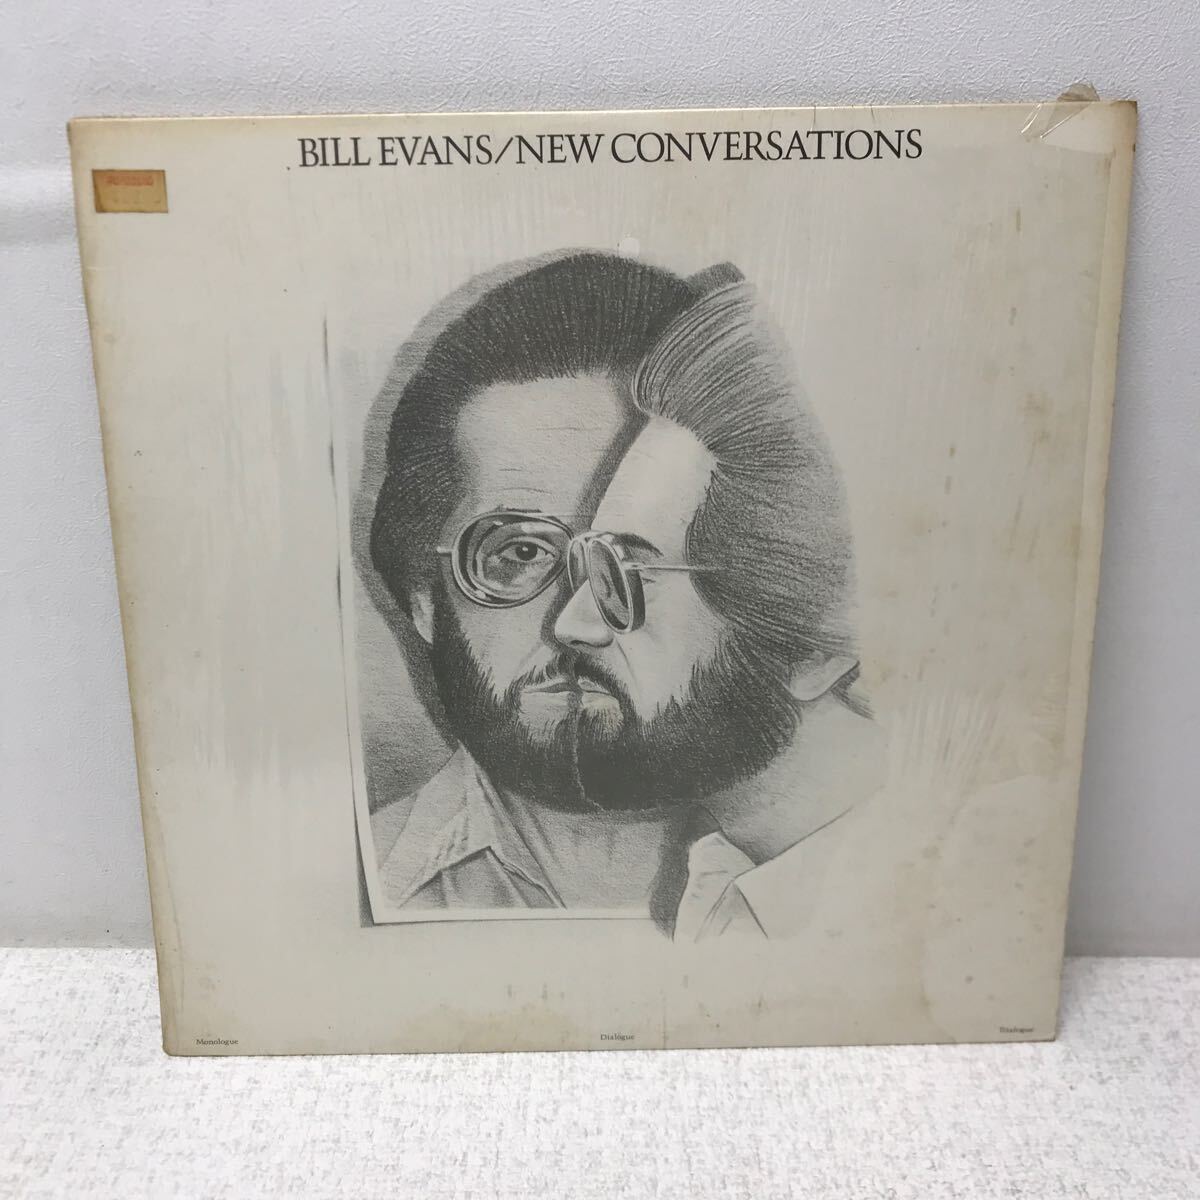 I0516A3 ビル・エヴァンス BILL EVANS NEW CONVERSATIONS LP レコード 音楽 洋楽 ジャズ JAZZ BSK 3177 輸入盤 US盤_画像1